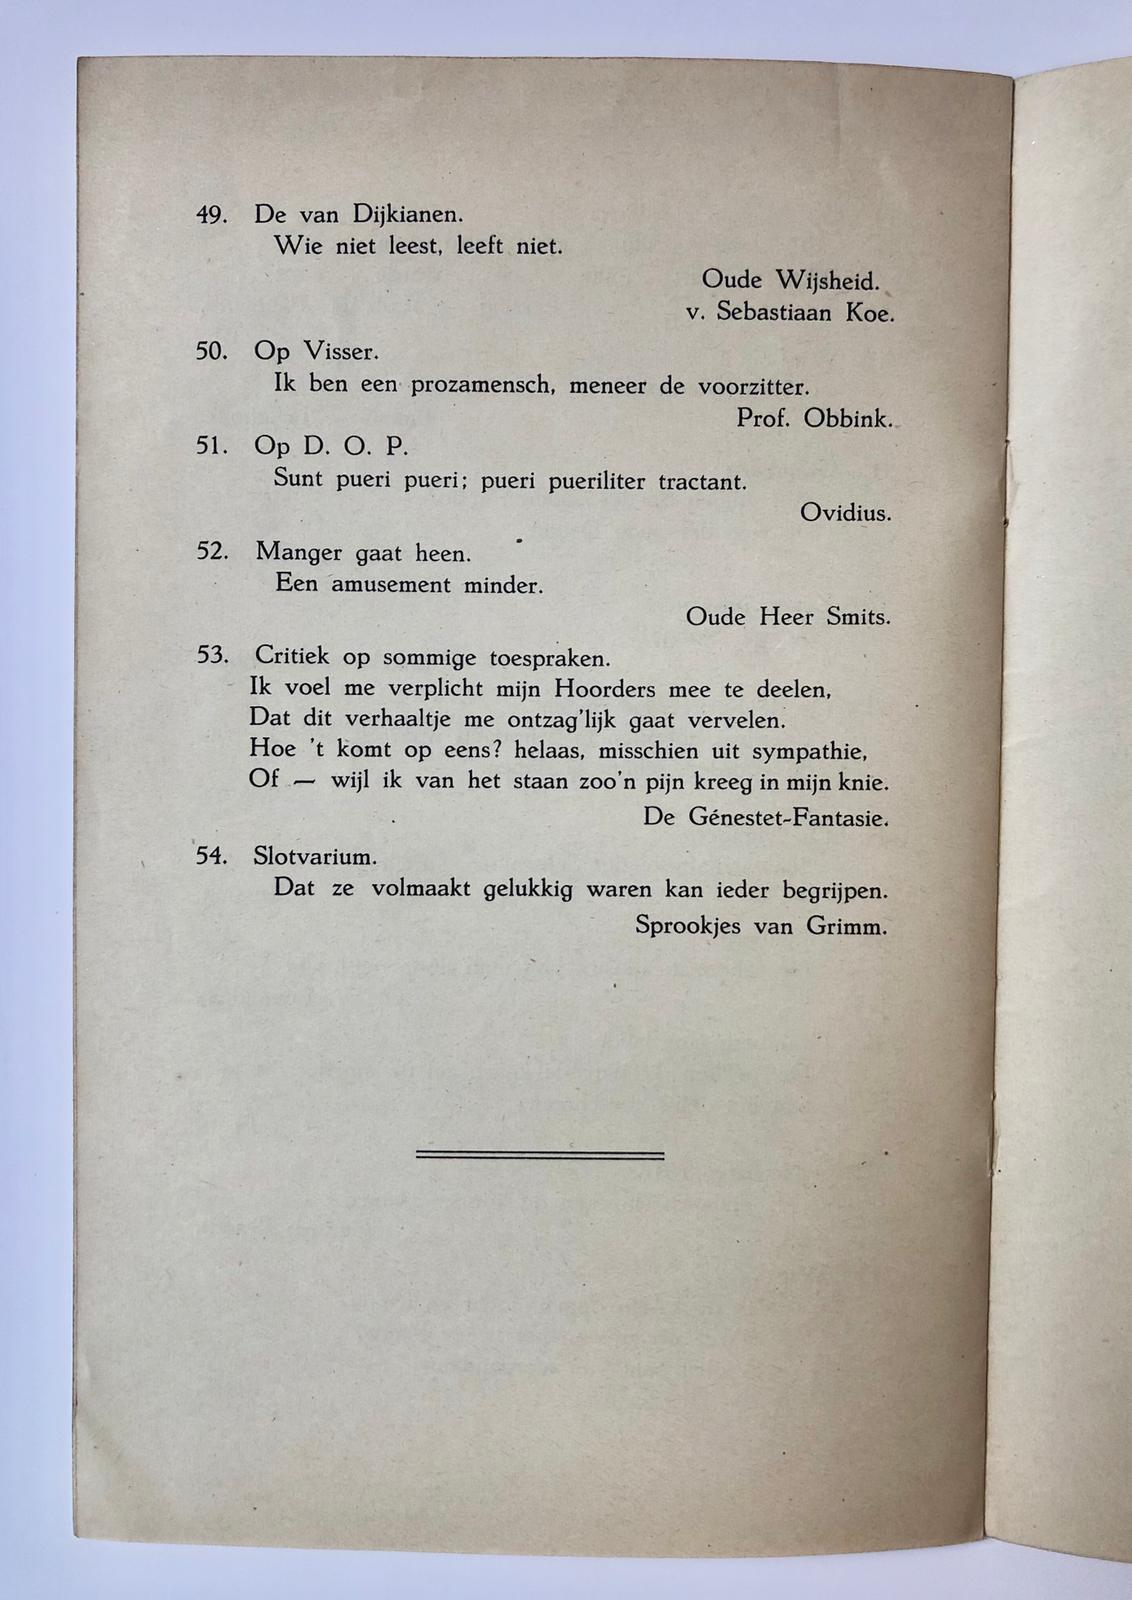 [Documents Students, Studentengezelfschap (?) E.D.J, 1919] ‘Varia’ t.g.v. de dies-viering 1919 van E.D.J. Gedrukte brochure, 6 pag. 8°.